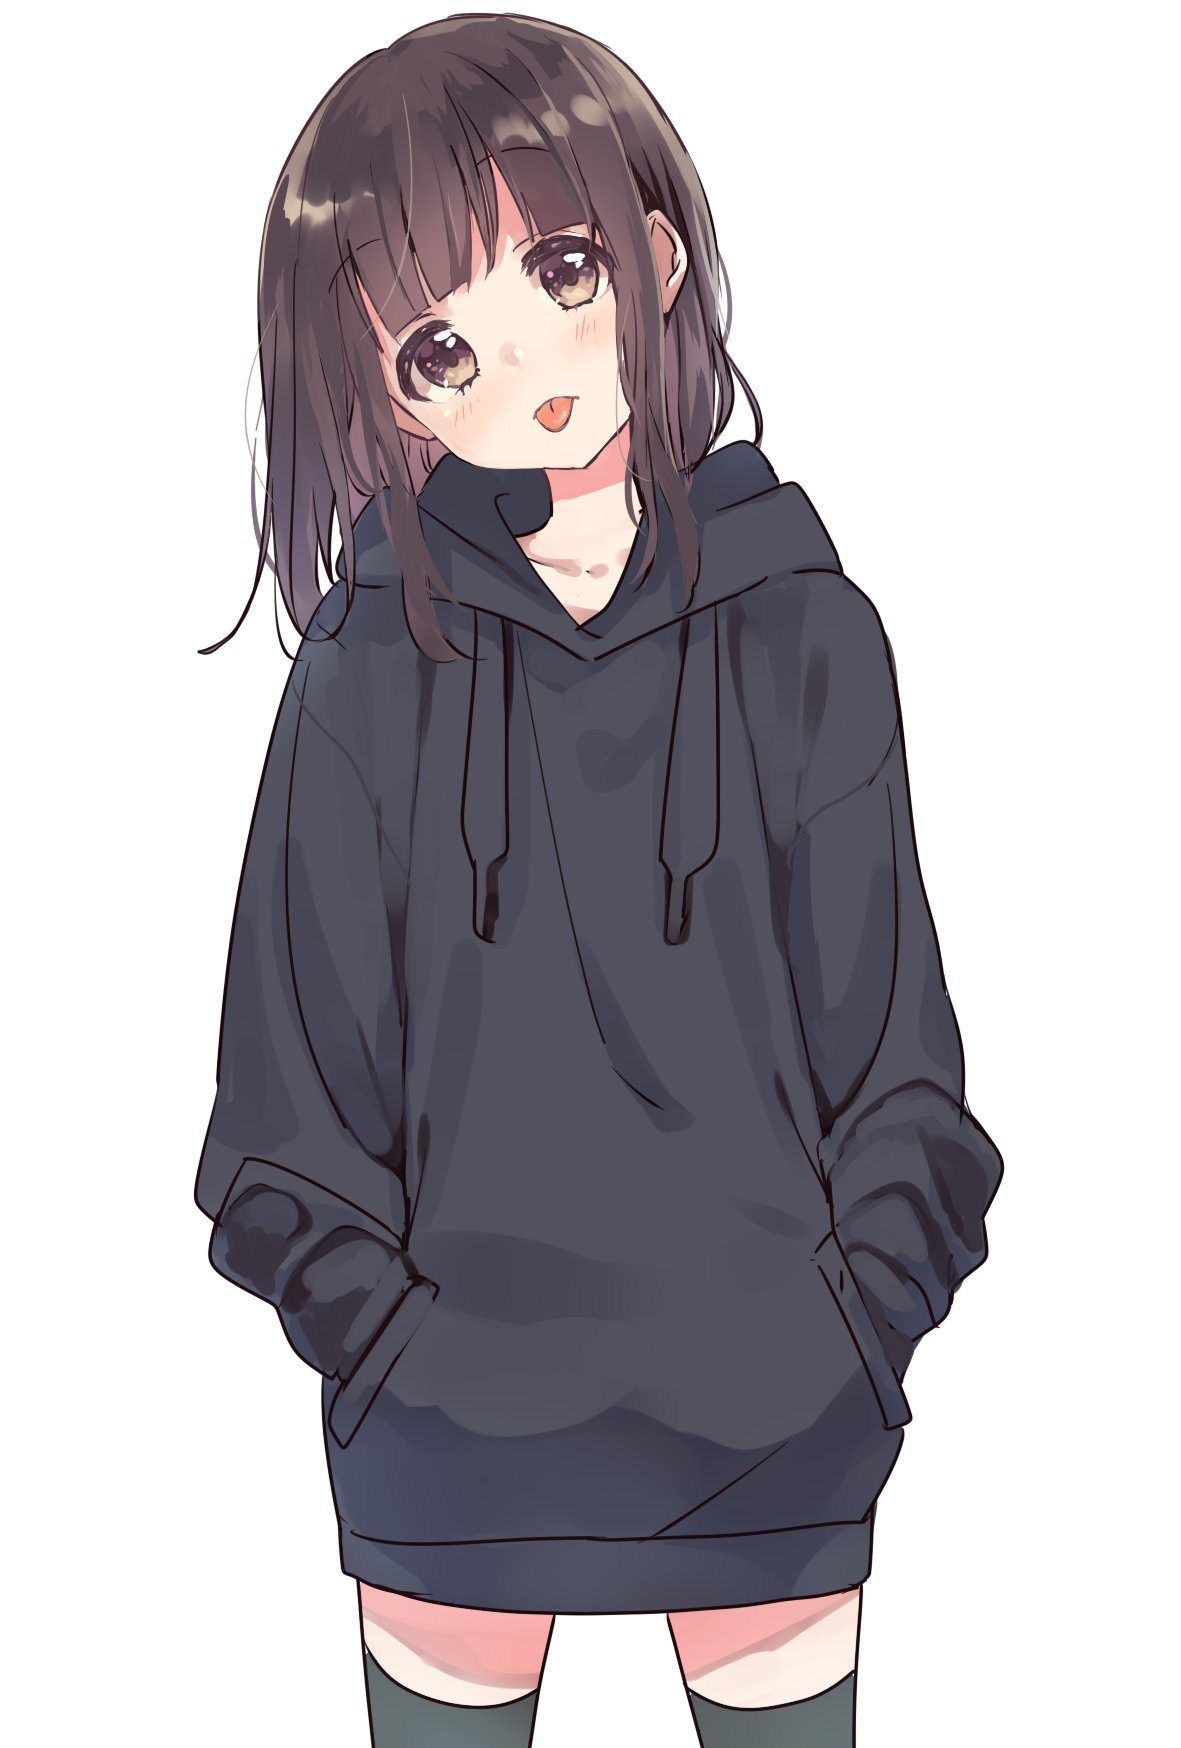 Cute Anime Girl In Hoodie gambar ke 2